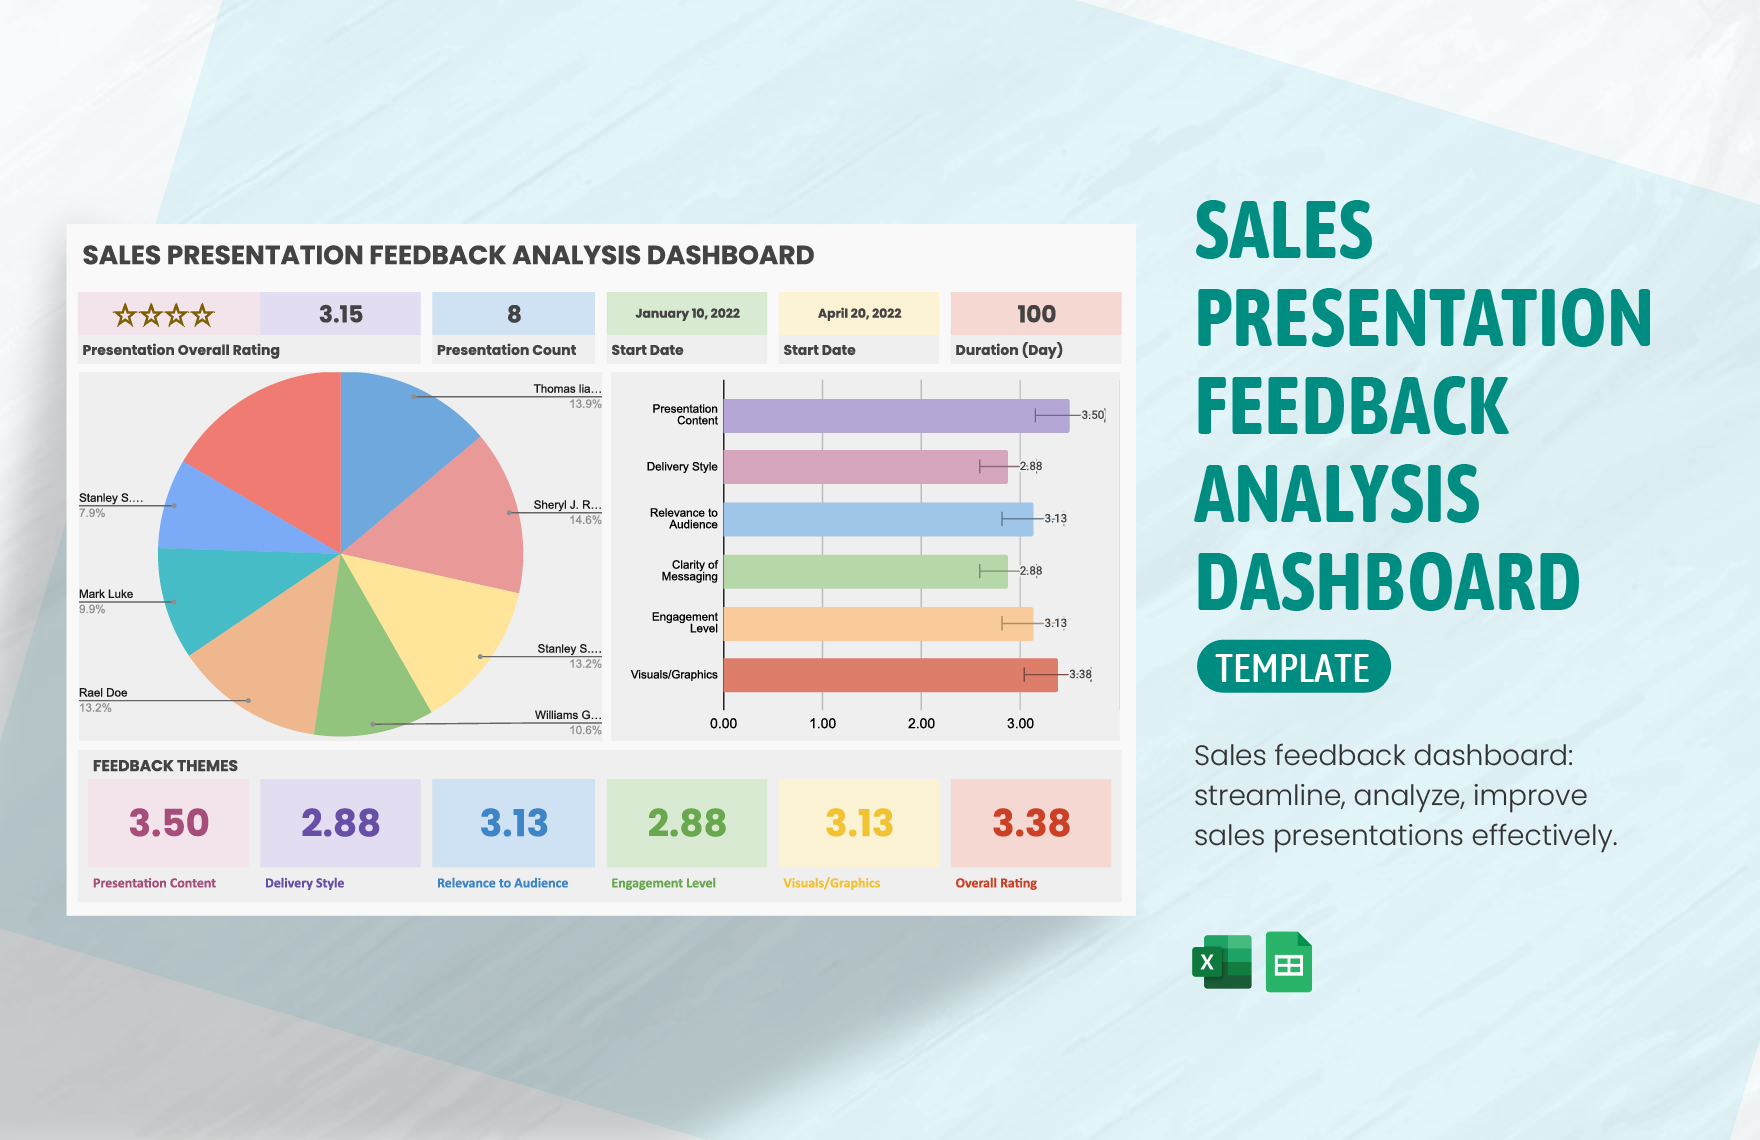 Sales Presentation Feedback Analysis Dashboard Template